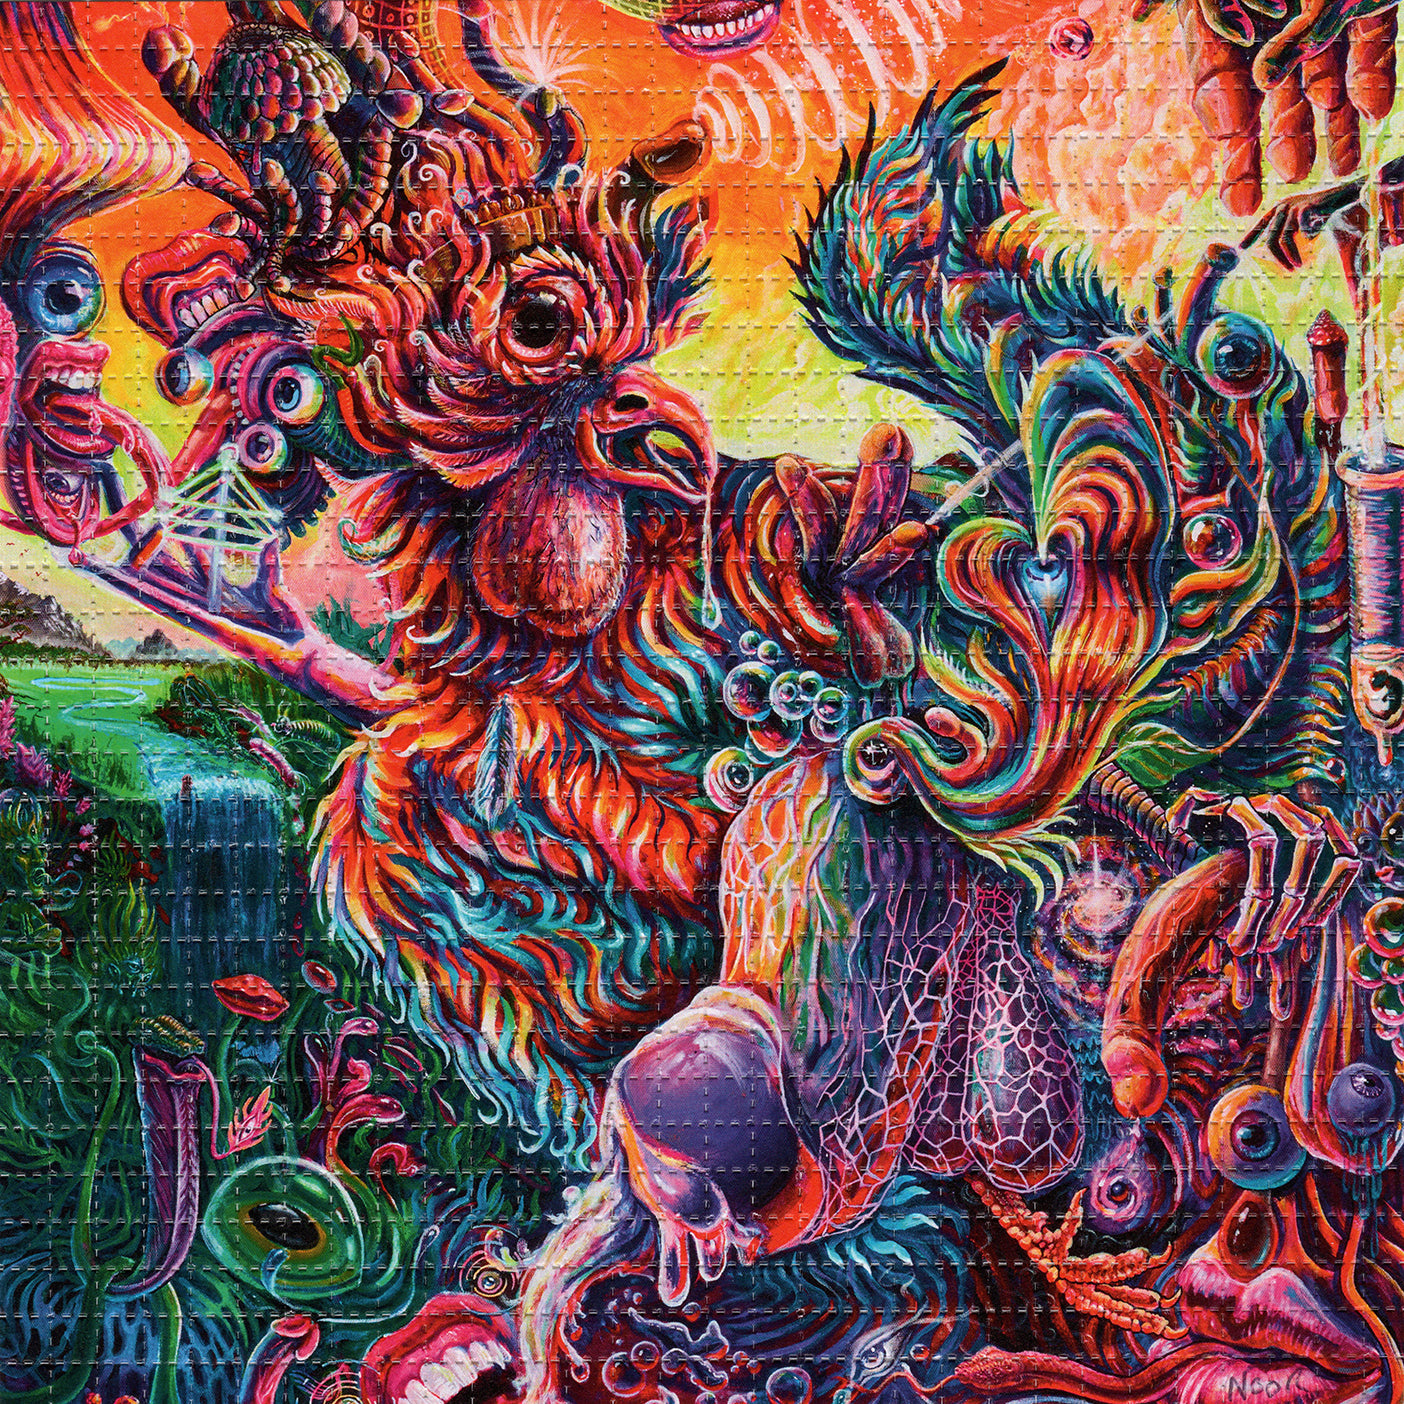 Cock-A-Doodle-Doo by GavinGerArt Signed Limited Edition LSD blotter art print